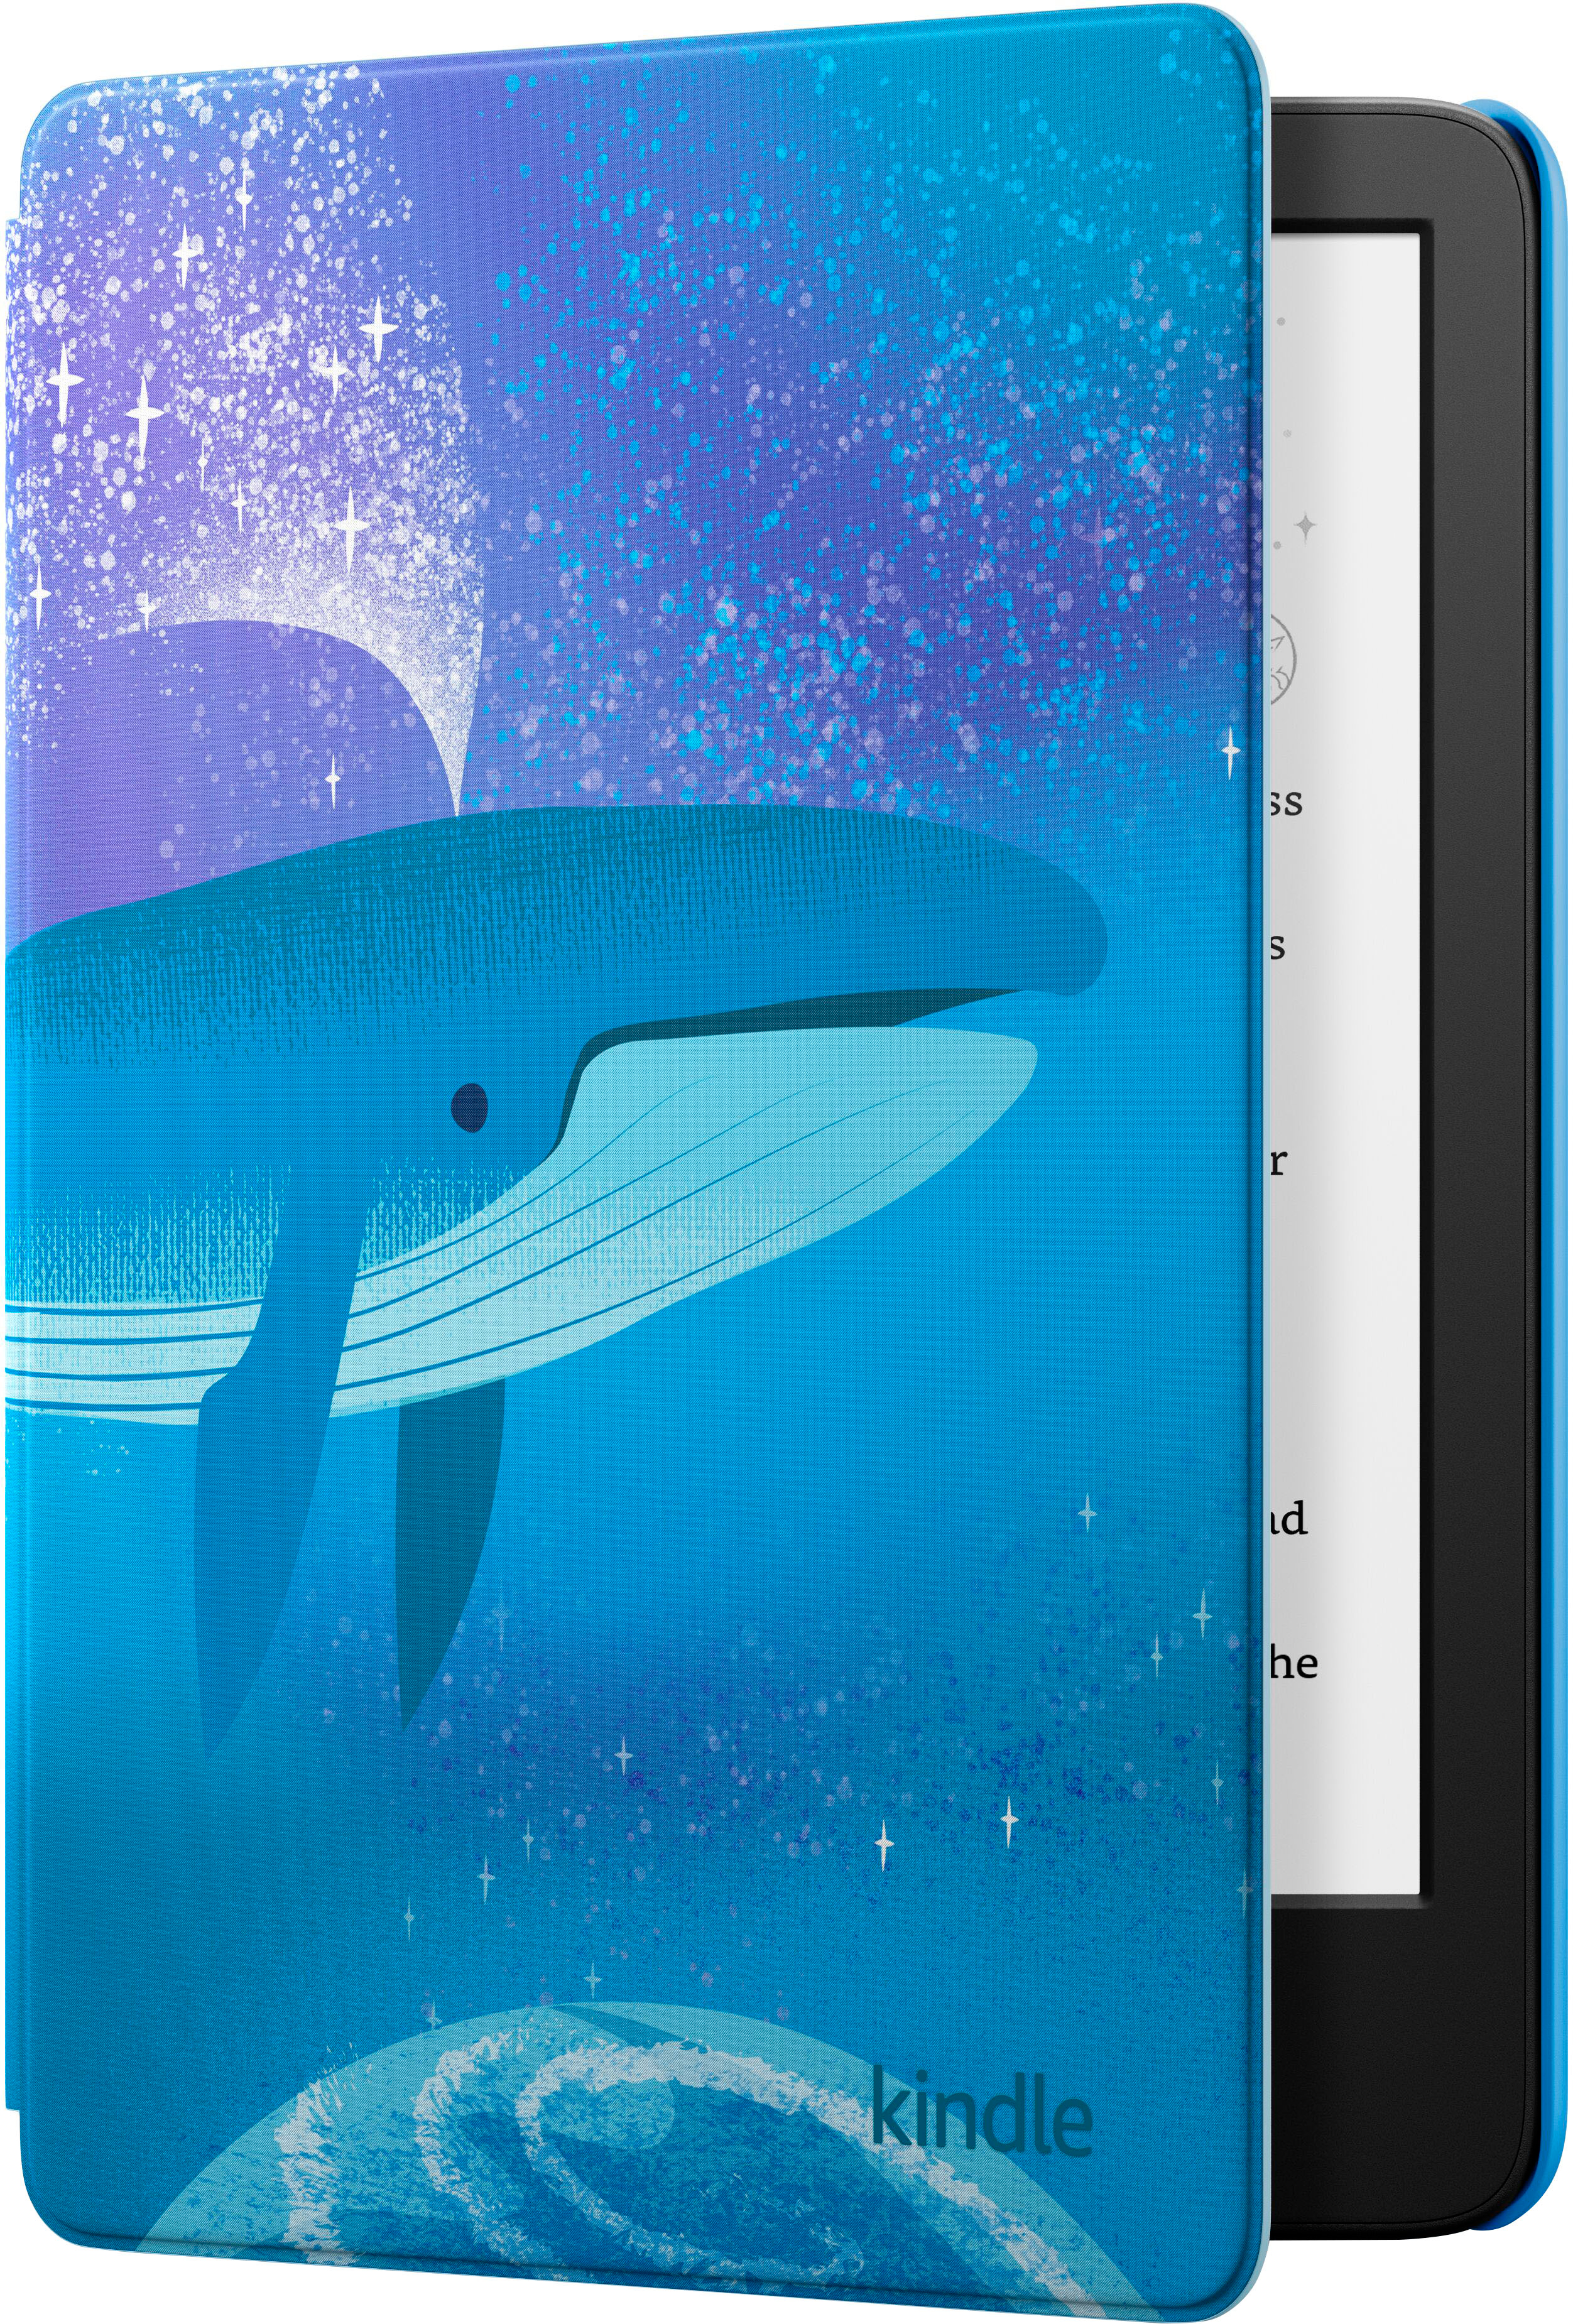  Kindle Kids Essentials Bundle including Kindle Kids (2022  release), Kids Cover - Ocean Explorer, Power Adapter, and Screen Protector